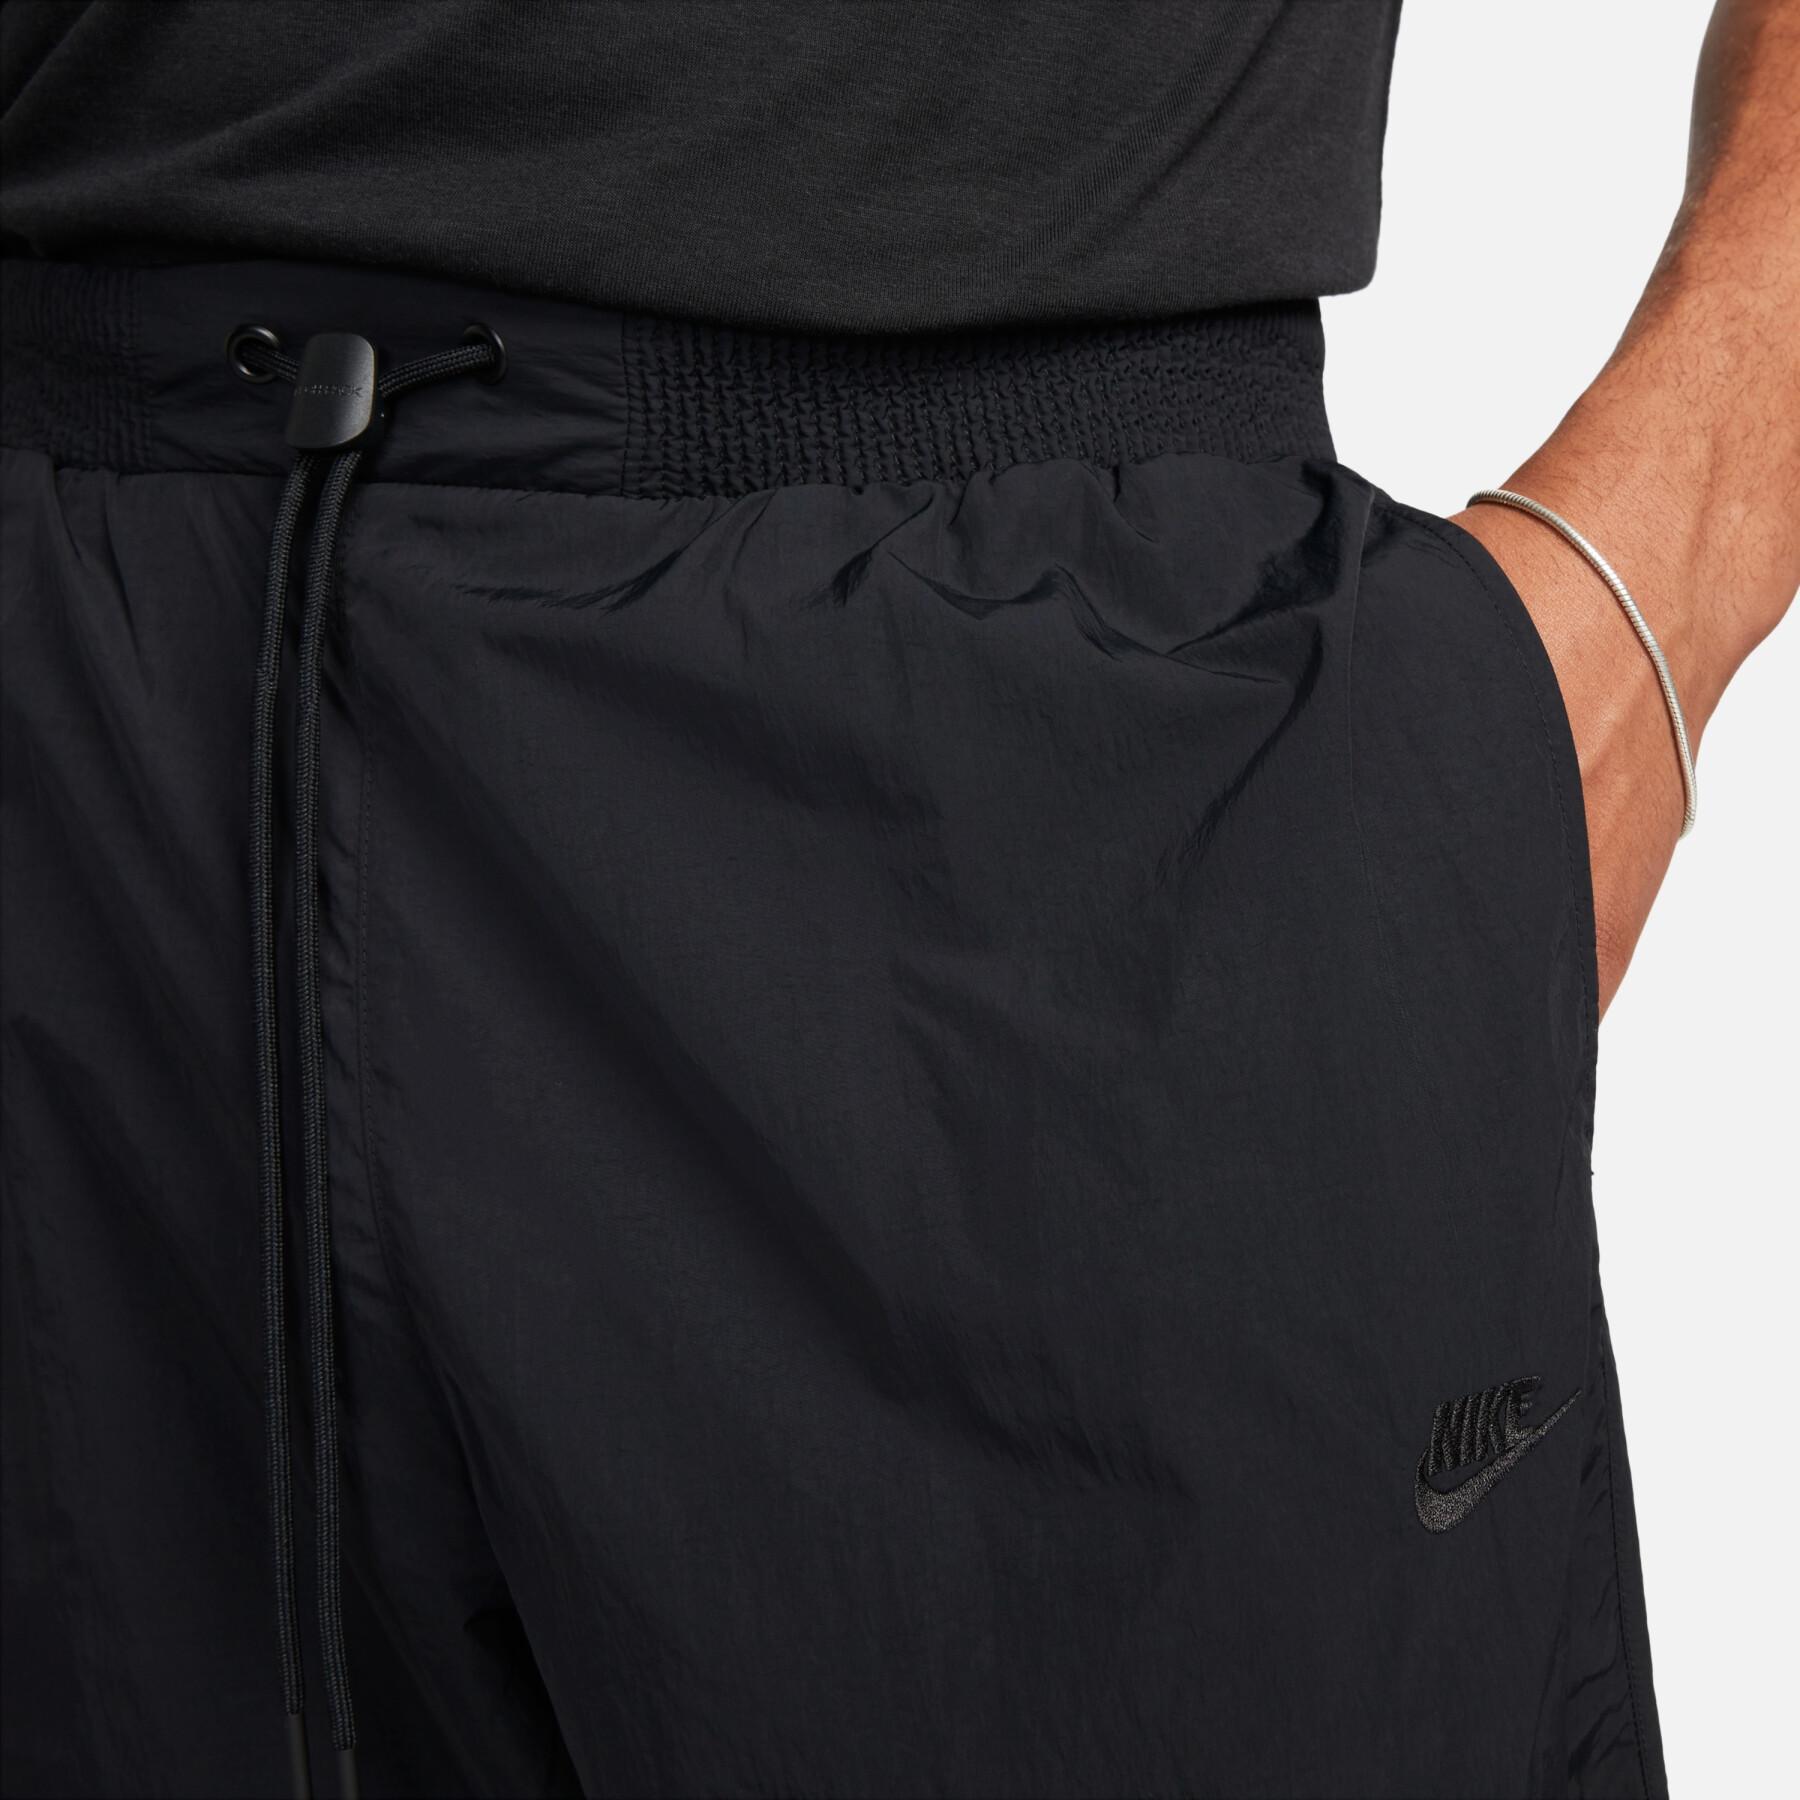 Pantalon tissé Nike Tech Pack